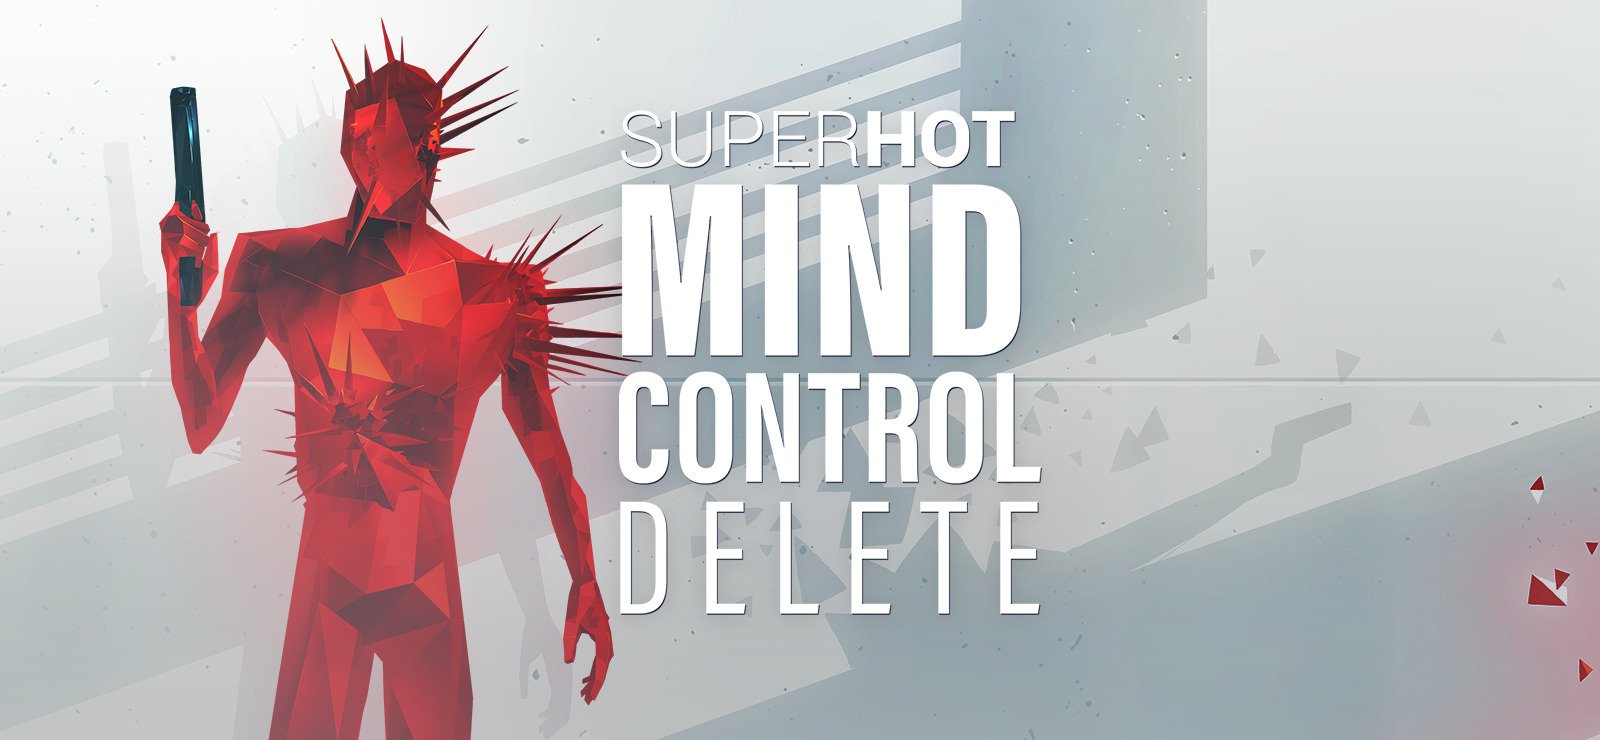 SUPERHOT MIND CONTROL DELETE 11